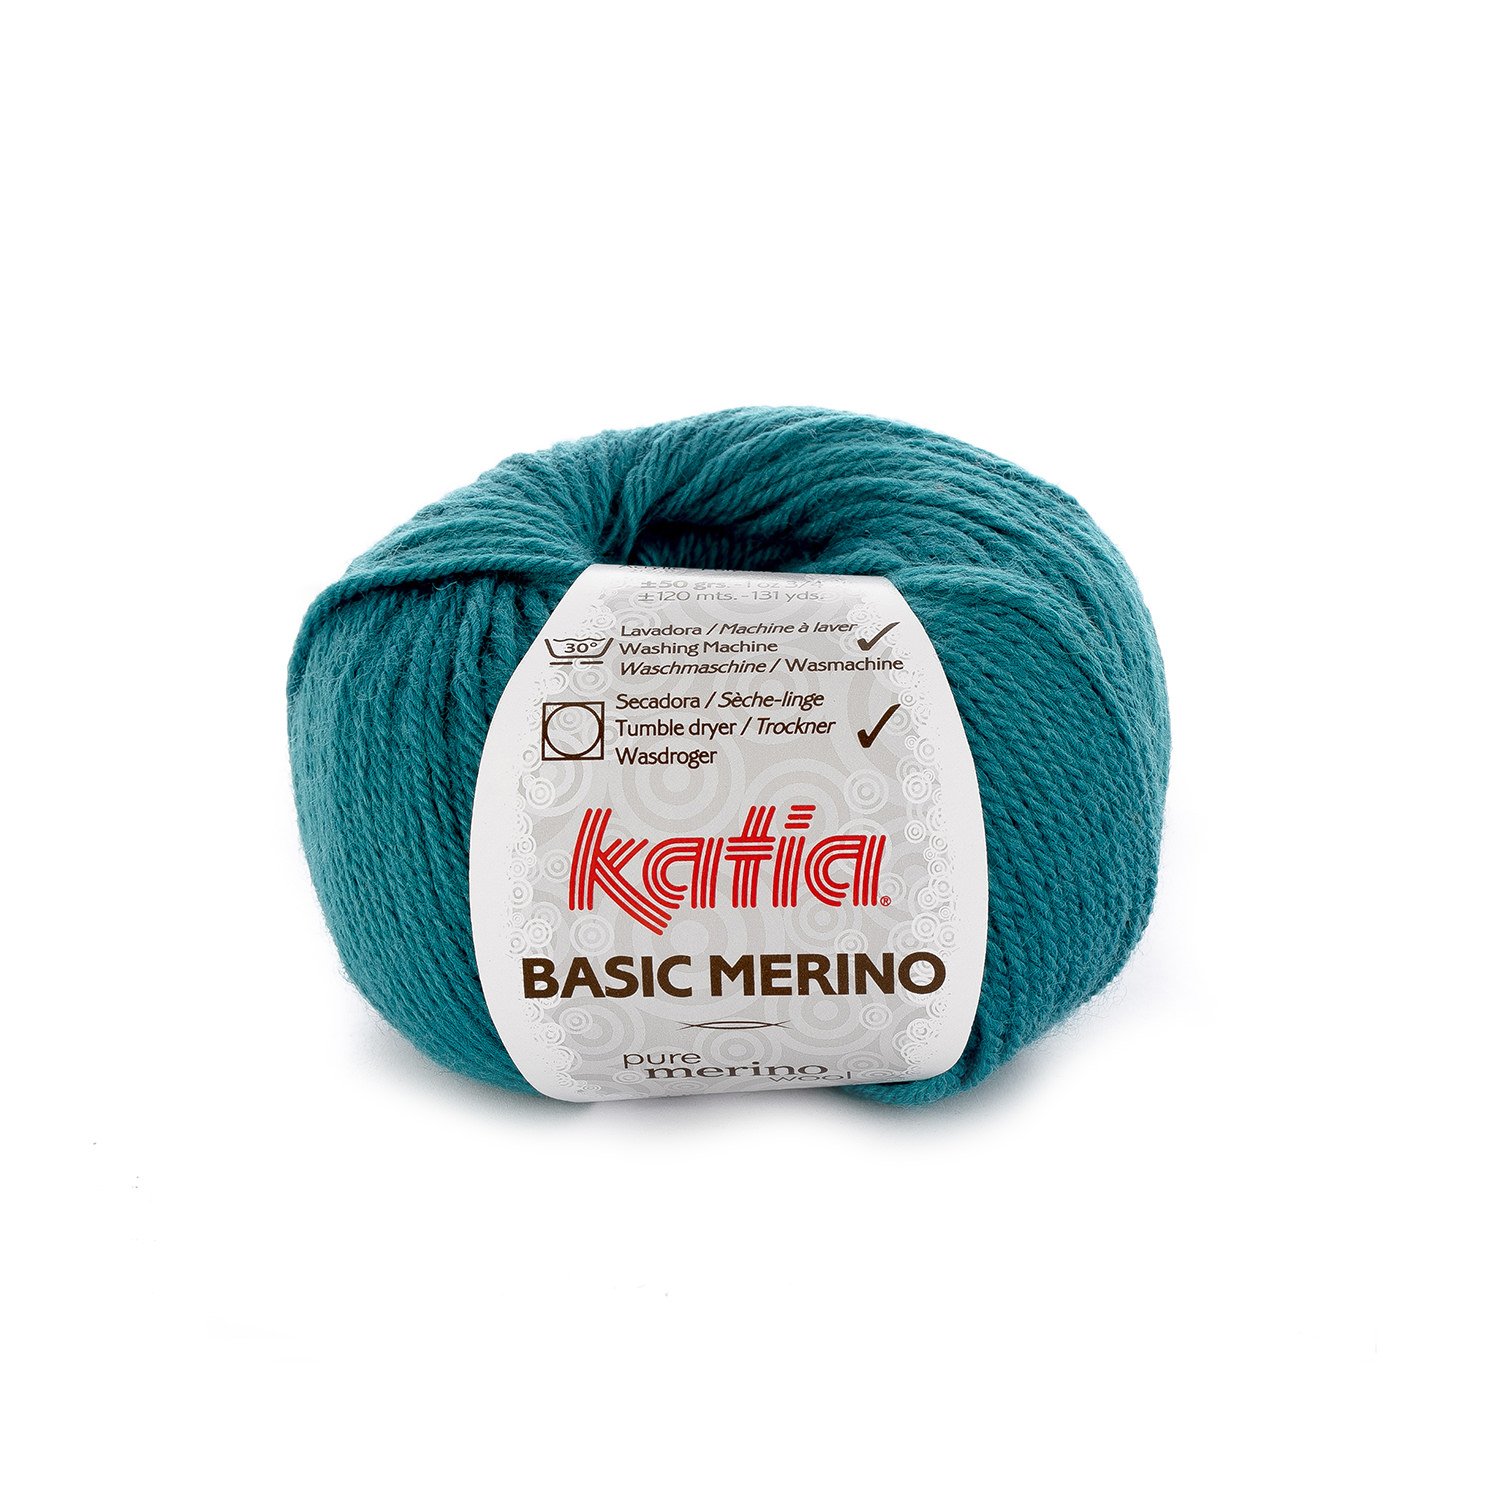 39 laine-fil-basicmerino-tricoter-merino-superwash-acrylique-bleu-vert-automne-hiver-katia-39-fhd